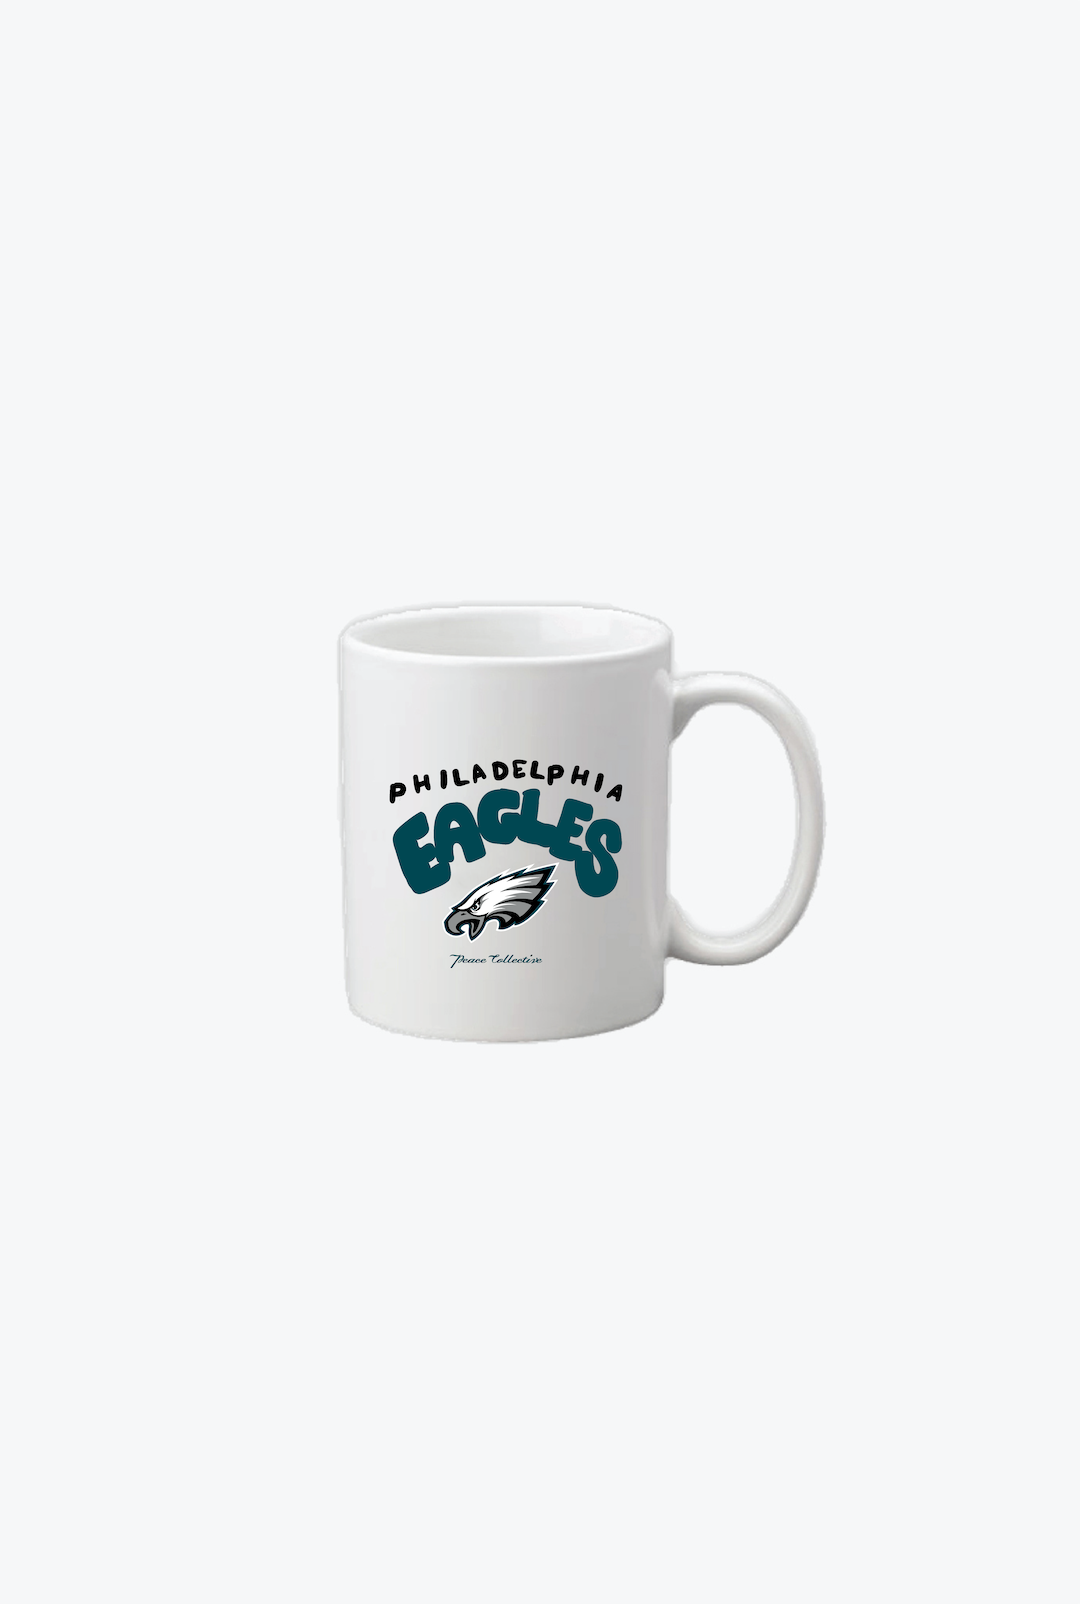 Philadelphia Eagles Mug - White